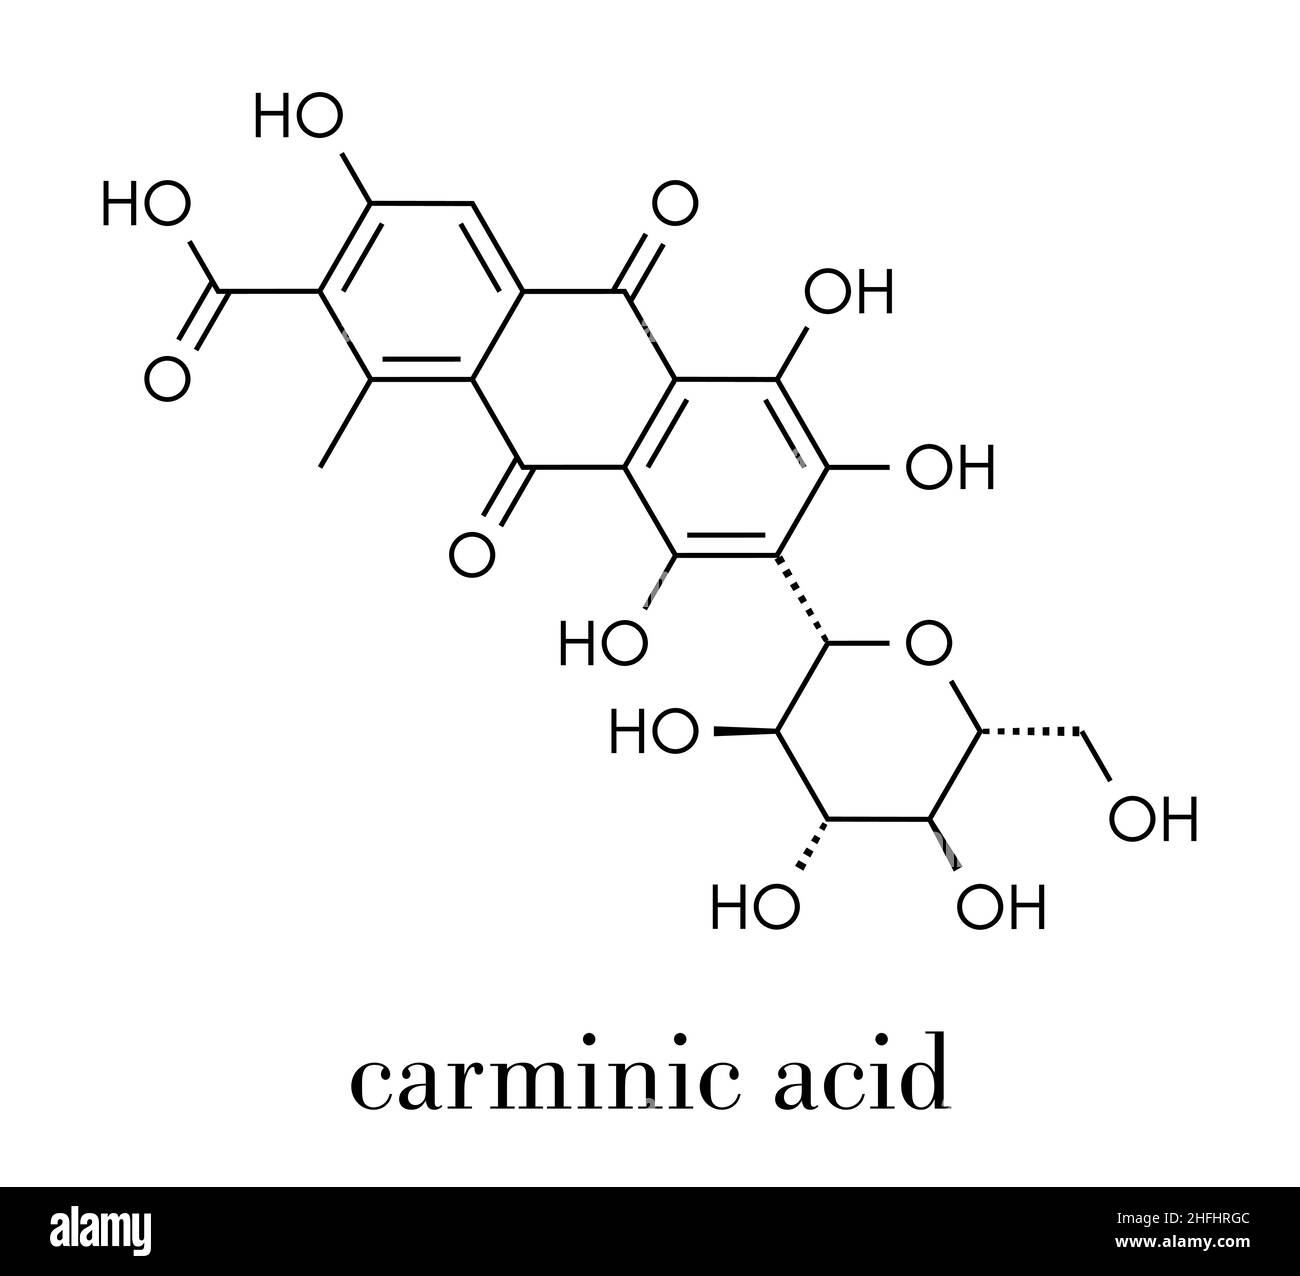 Carminsäure-Pigmentmolekül. Kommt natürlich in Cochineal (Schussinsekt) vor. Skelettformel. Stock Vektor